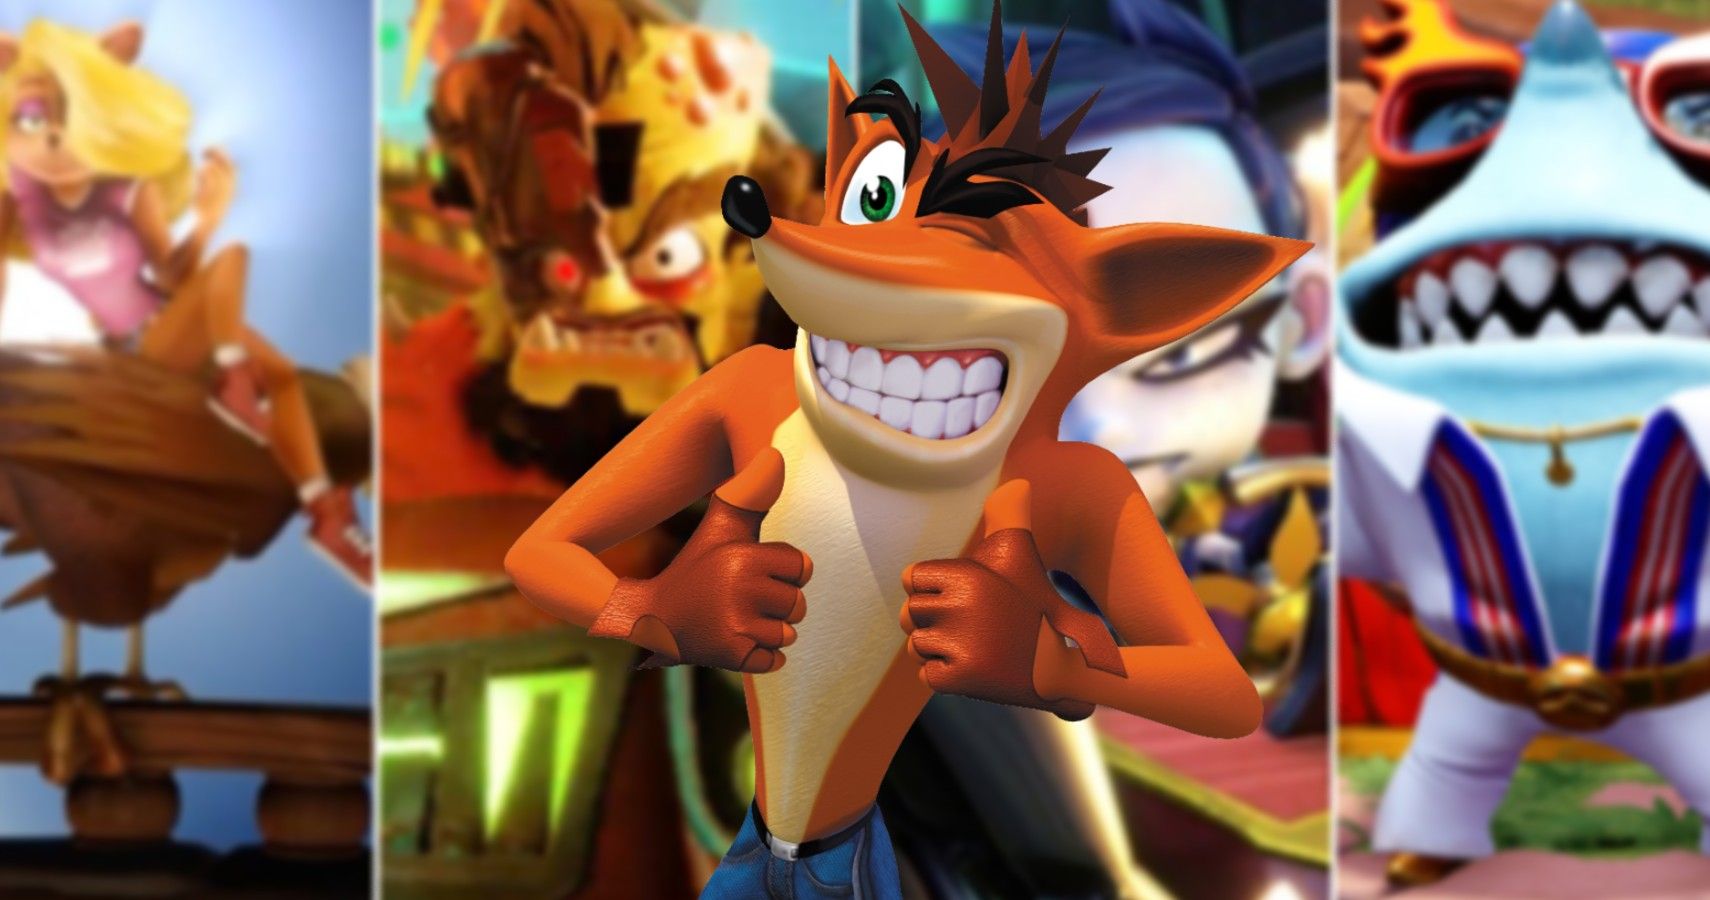 Crash Bandicoot 4 revisted: PlayStation 5 vs Nintendo Switch